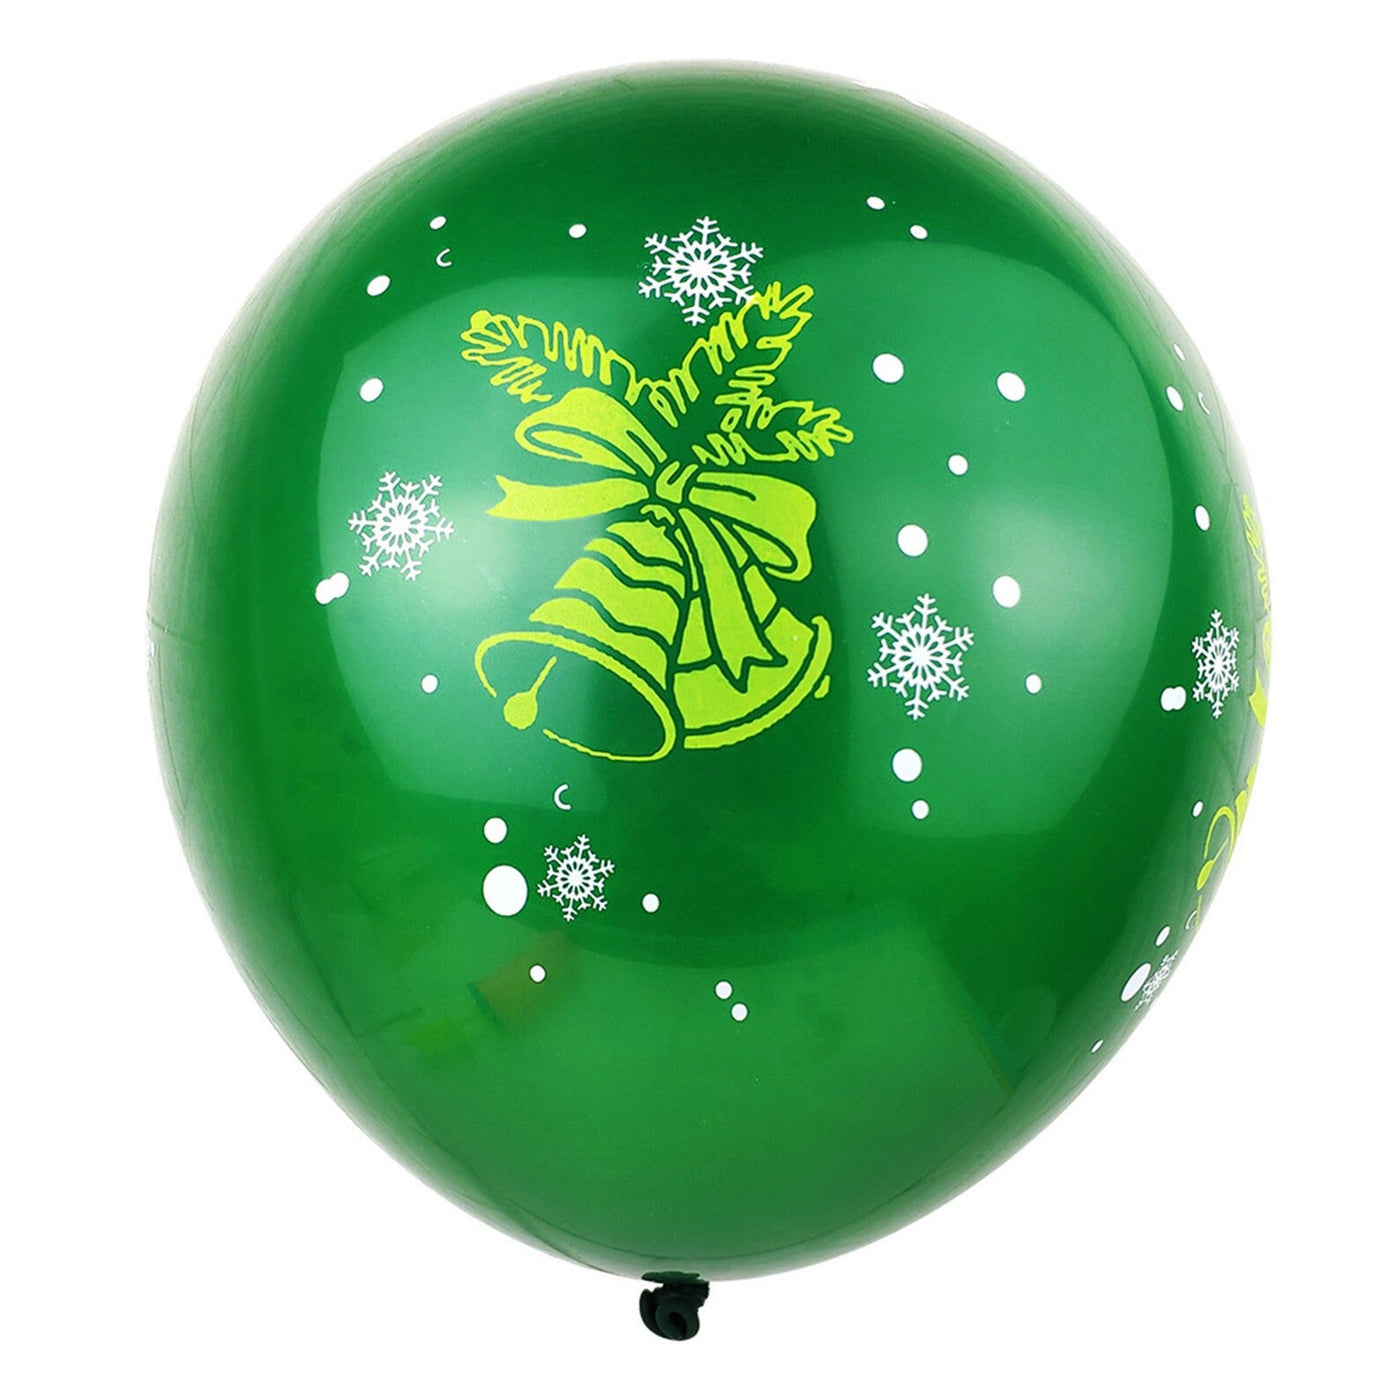 10pcs Red and Green Christmas Latex balloons-Santa balloon-Reindeer - Partyshakes Christmas Balloons